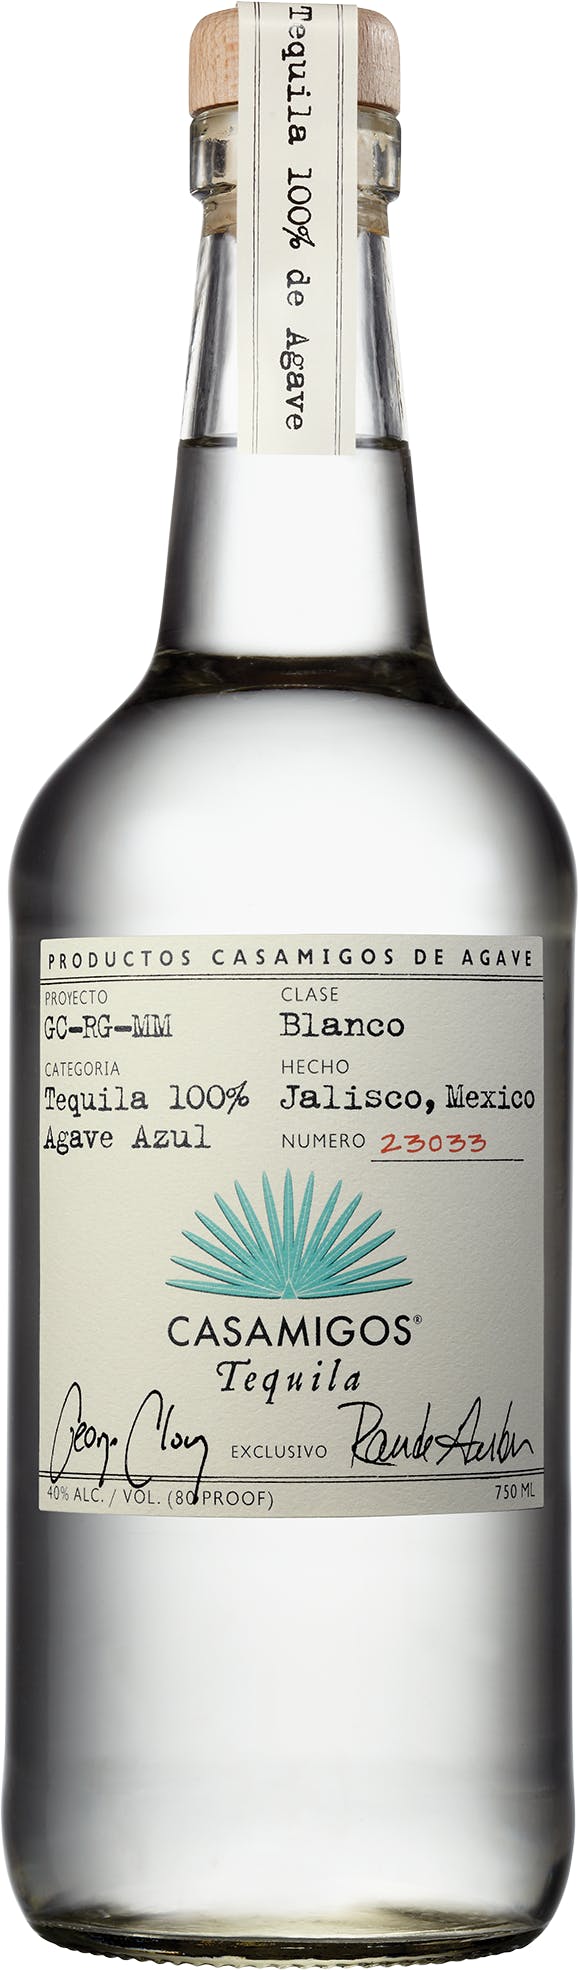 casamigos-blanco-tequila-1-75l-carlo-russo-wine-spirit-world